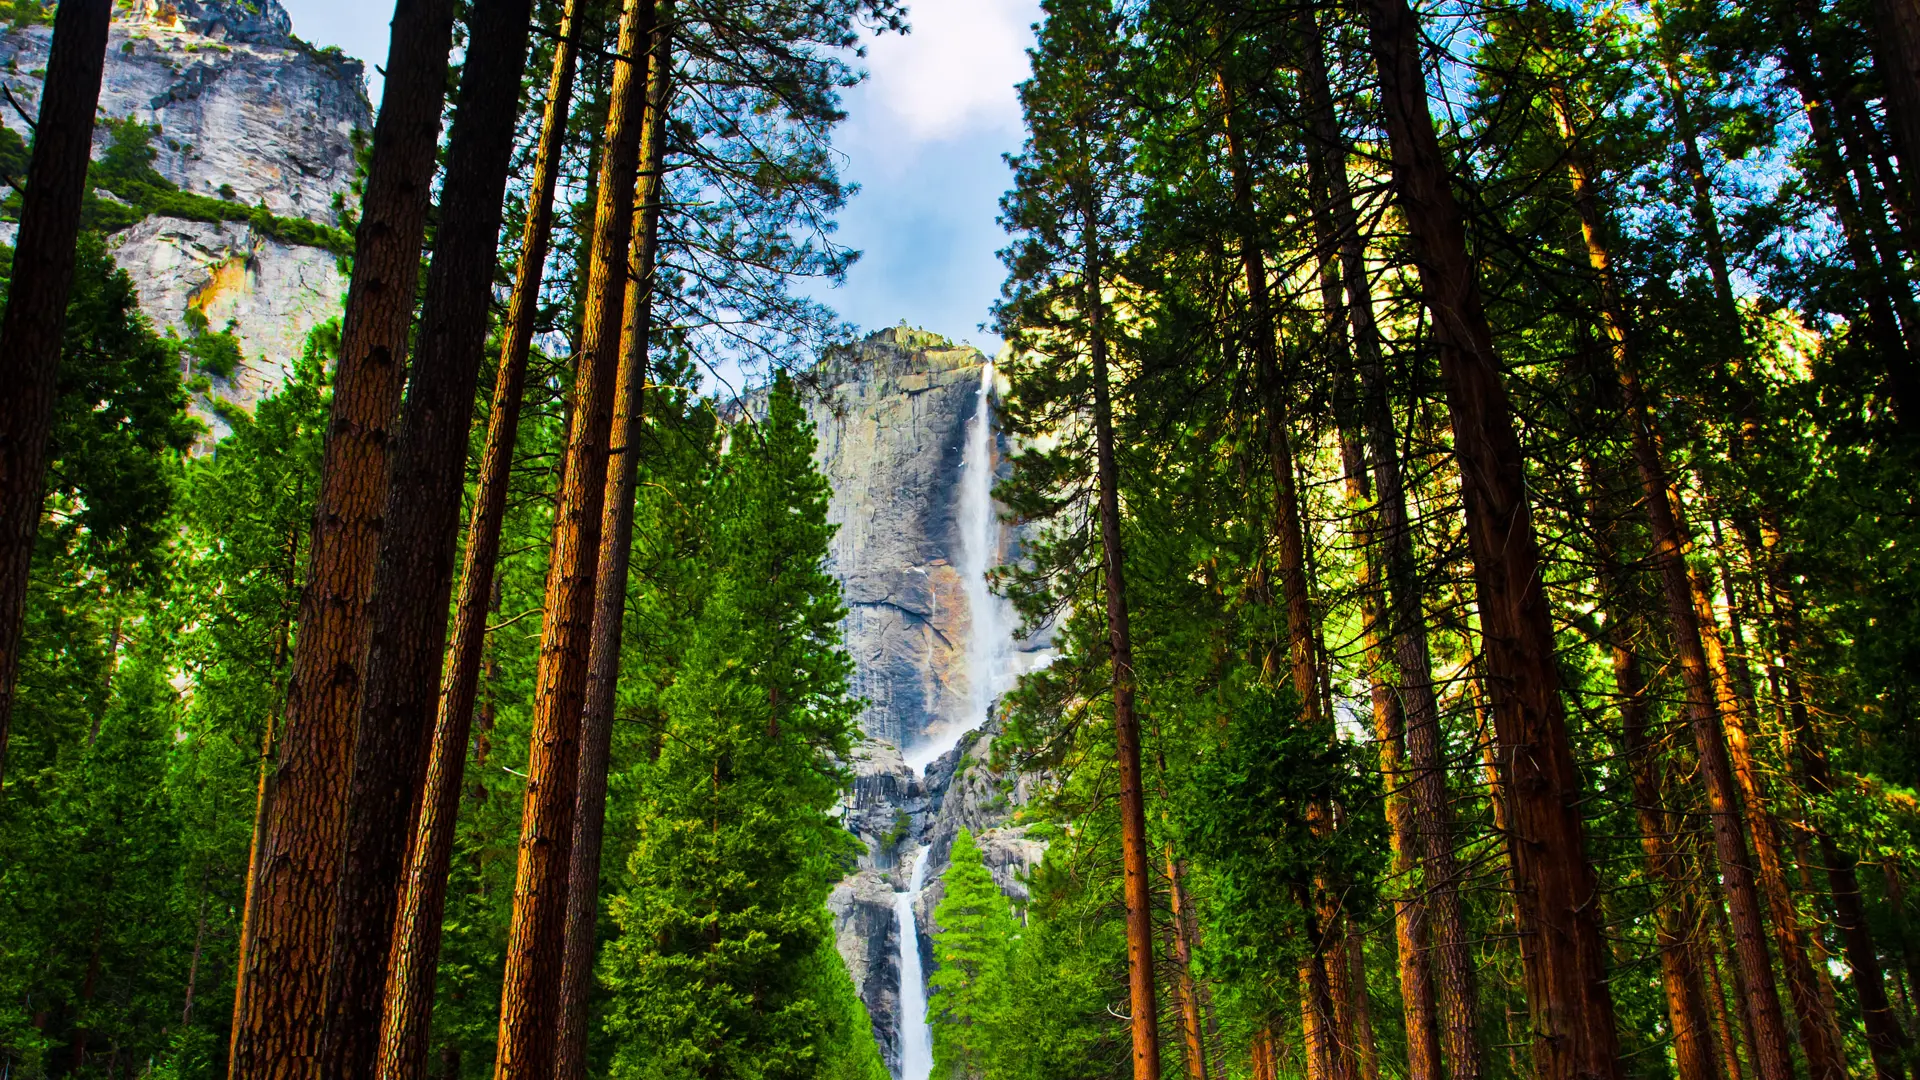 shutterstock_128950319 Yosemite Waterfalls behind Sequoias in Yosemite National Park,California.jpg